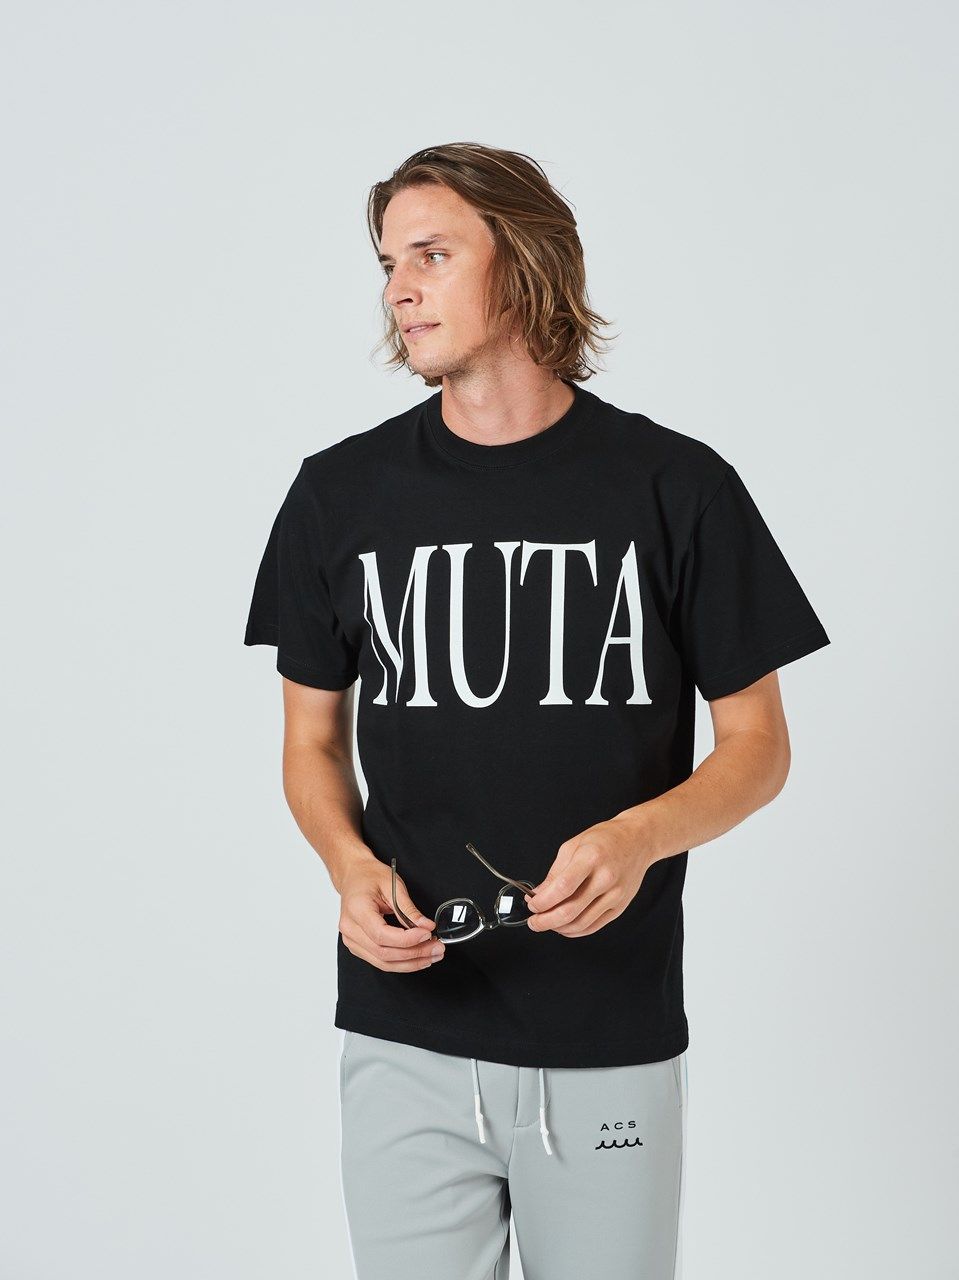 ACANTHUS - (予約品) muta BIG Logo Tee / Tシャツ / ブラック